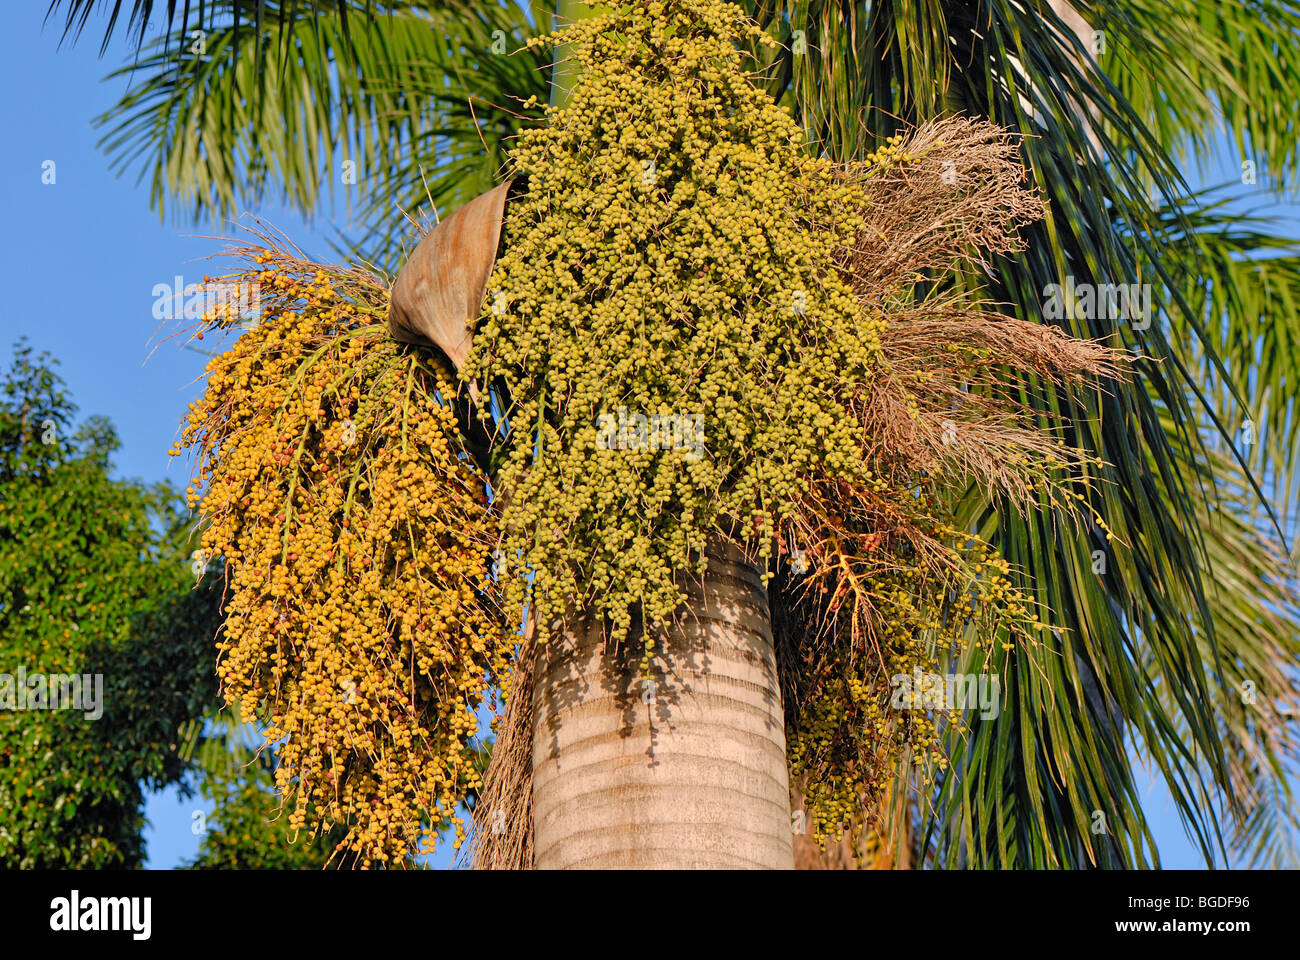 Date palm (Phoenix dactylifera), with seed heads, St. Croix island, U.S. Virgin Islands, United States Stock Photo